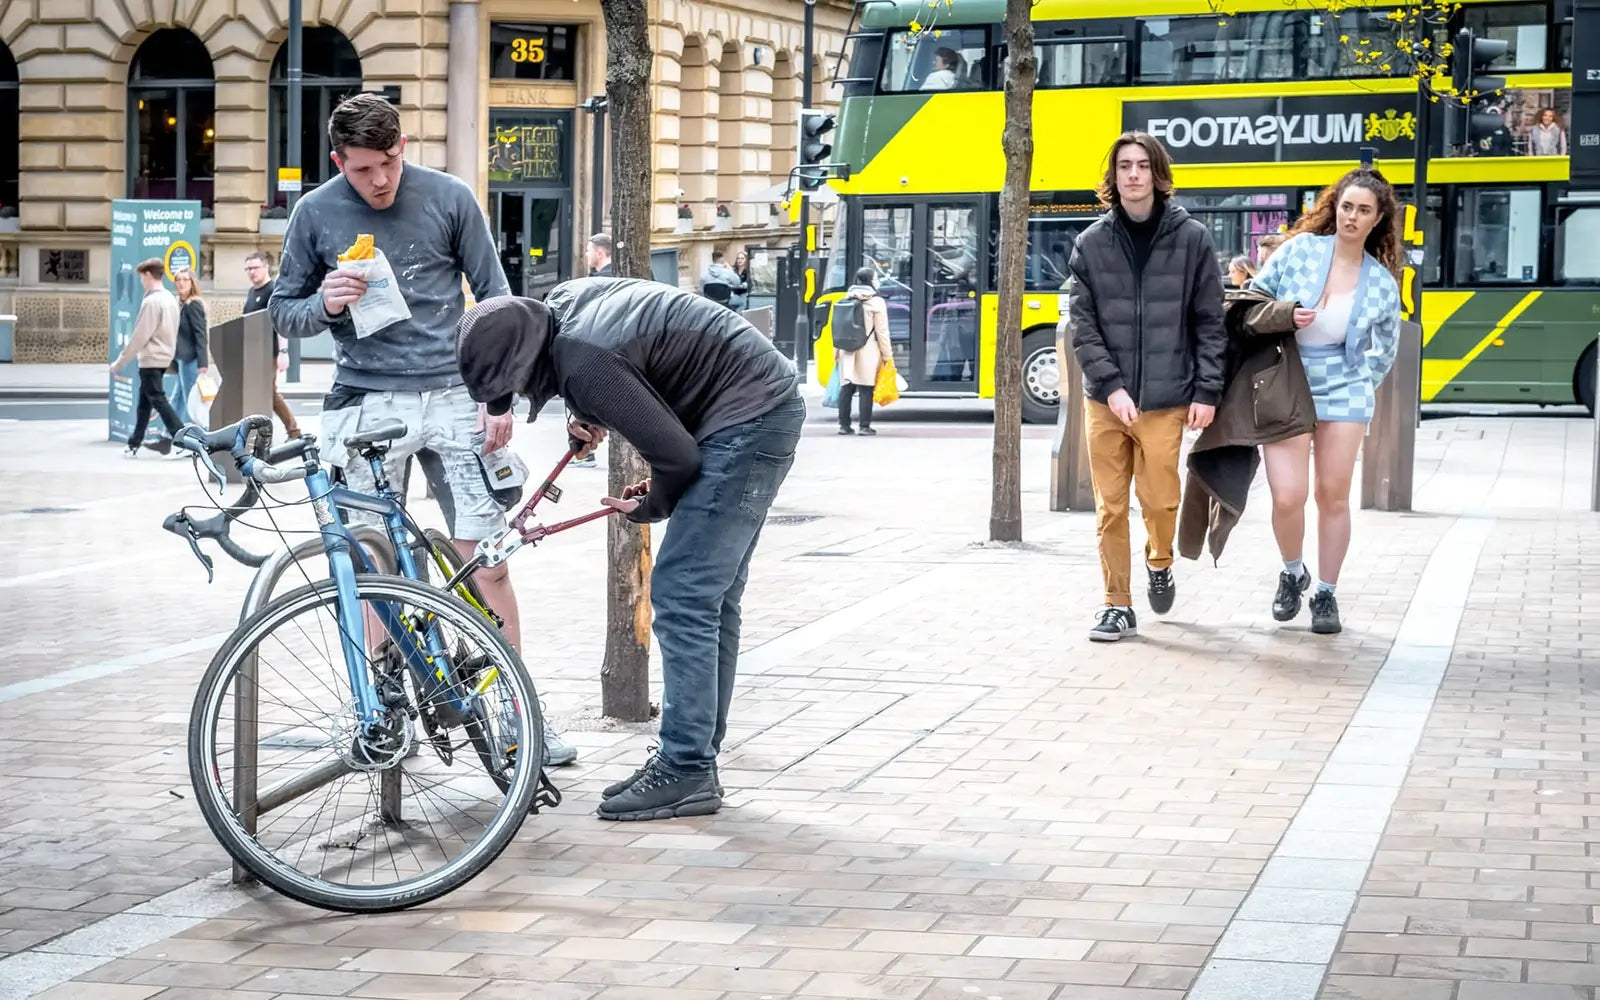 Electric bike thief in broad daylight